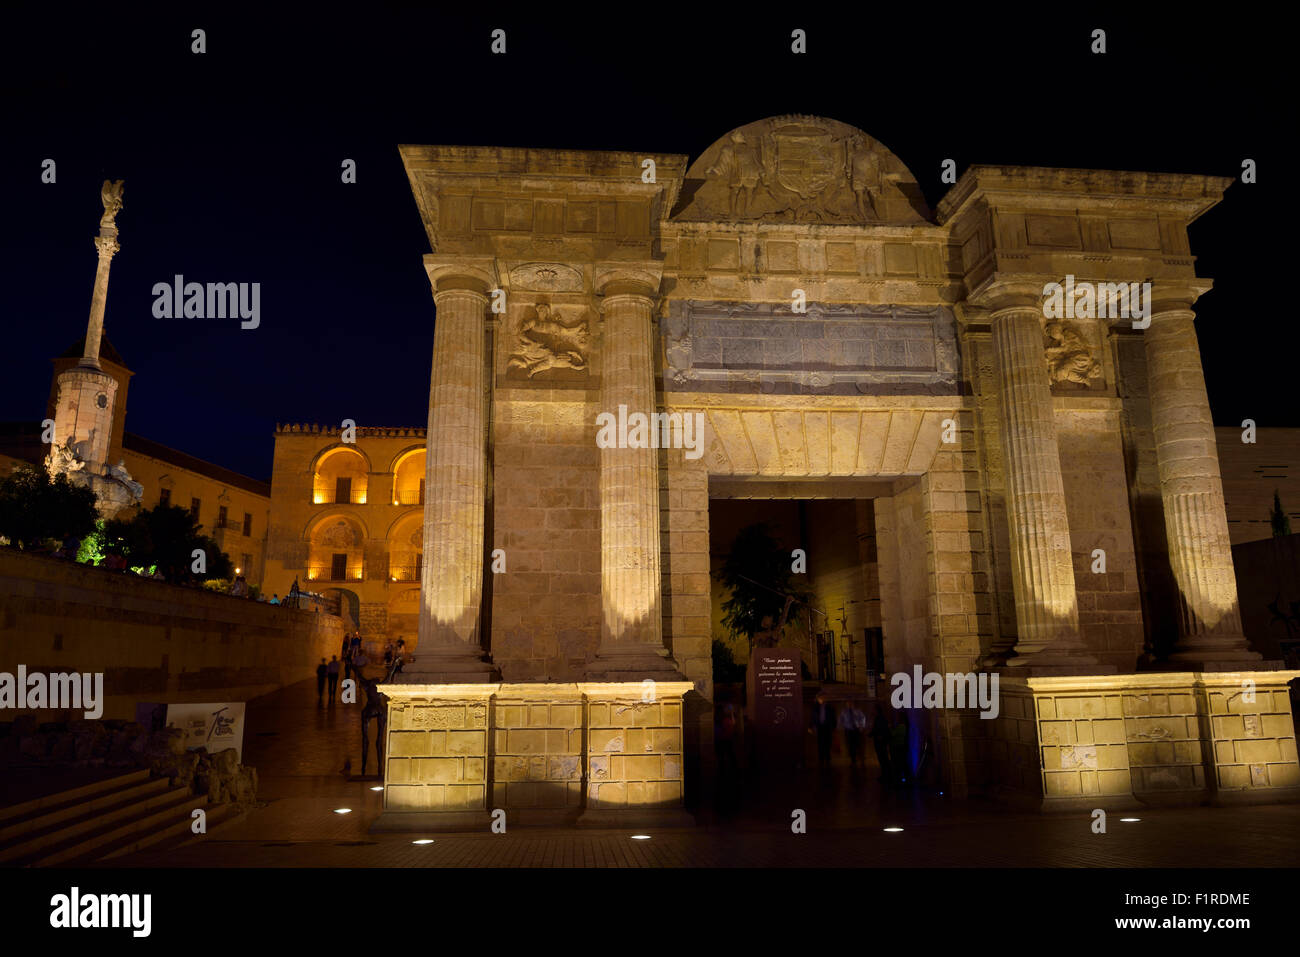 Puerta del Puente Roman Bridge Gate at night with Saint Raphael triumphal statue and Cordoba Cathedral Stock Photo